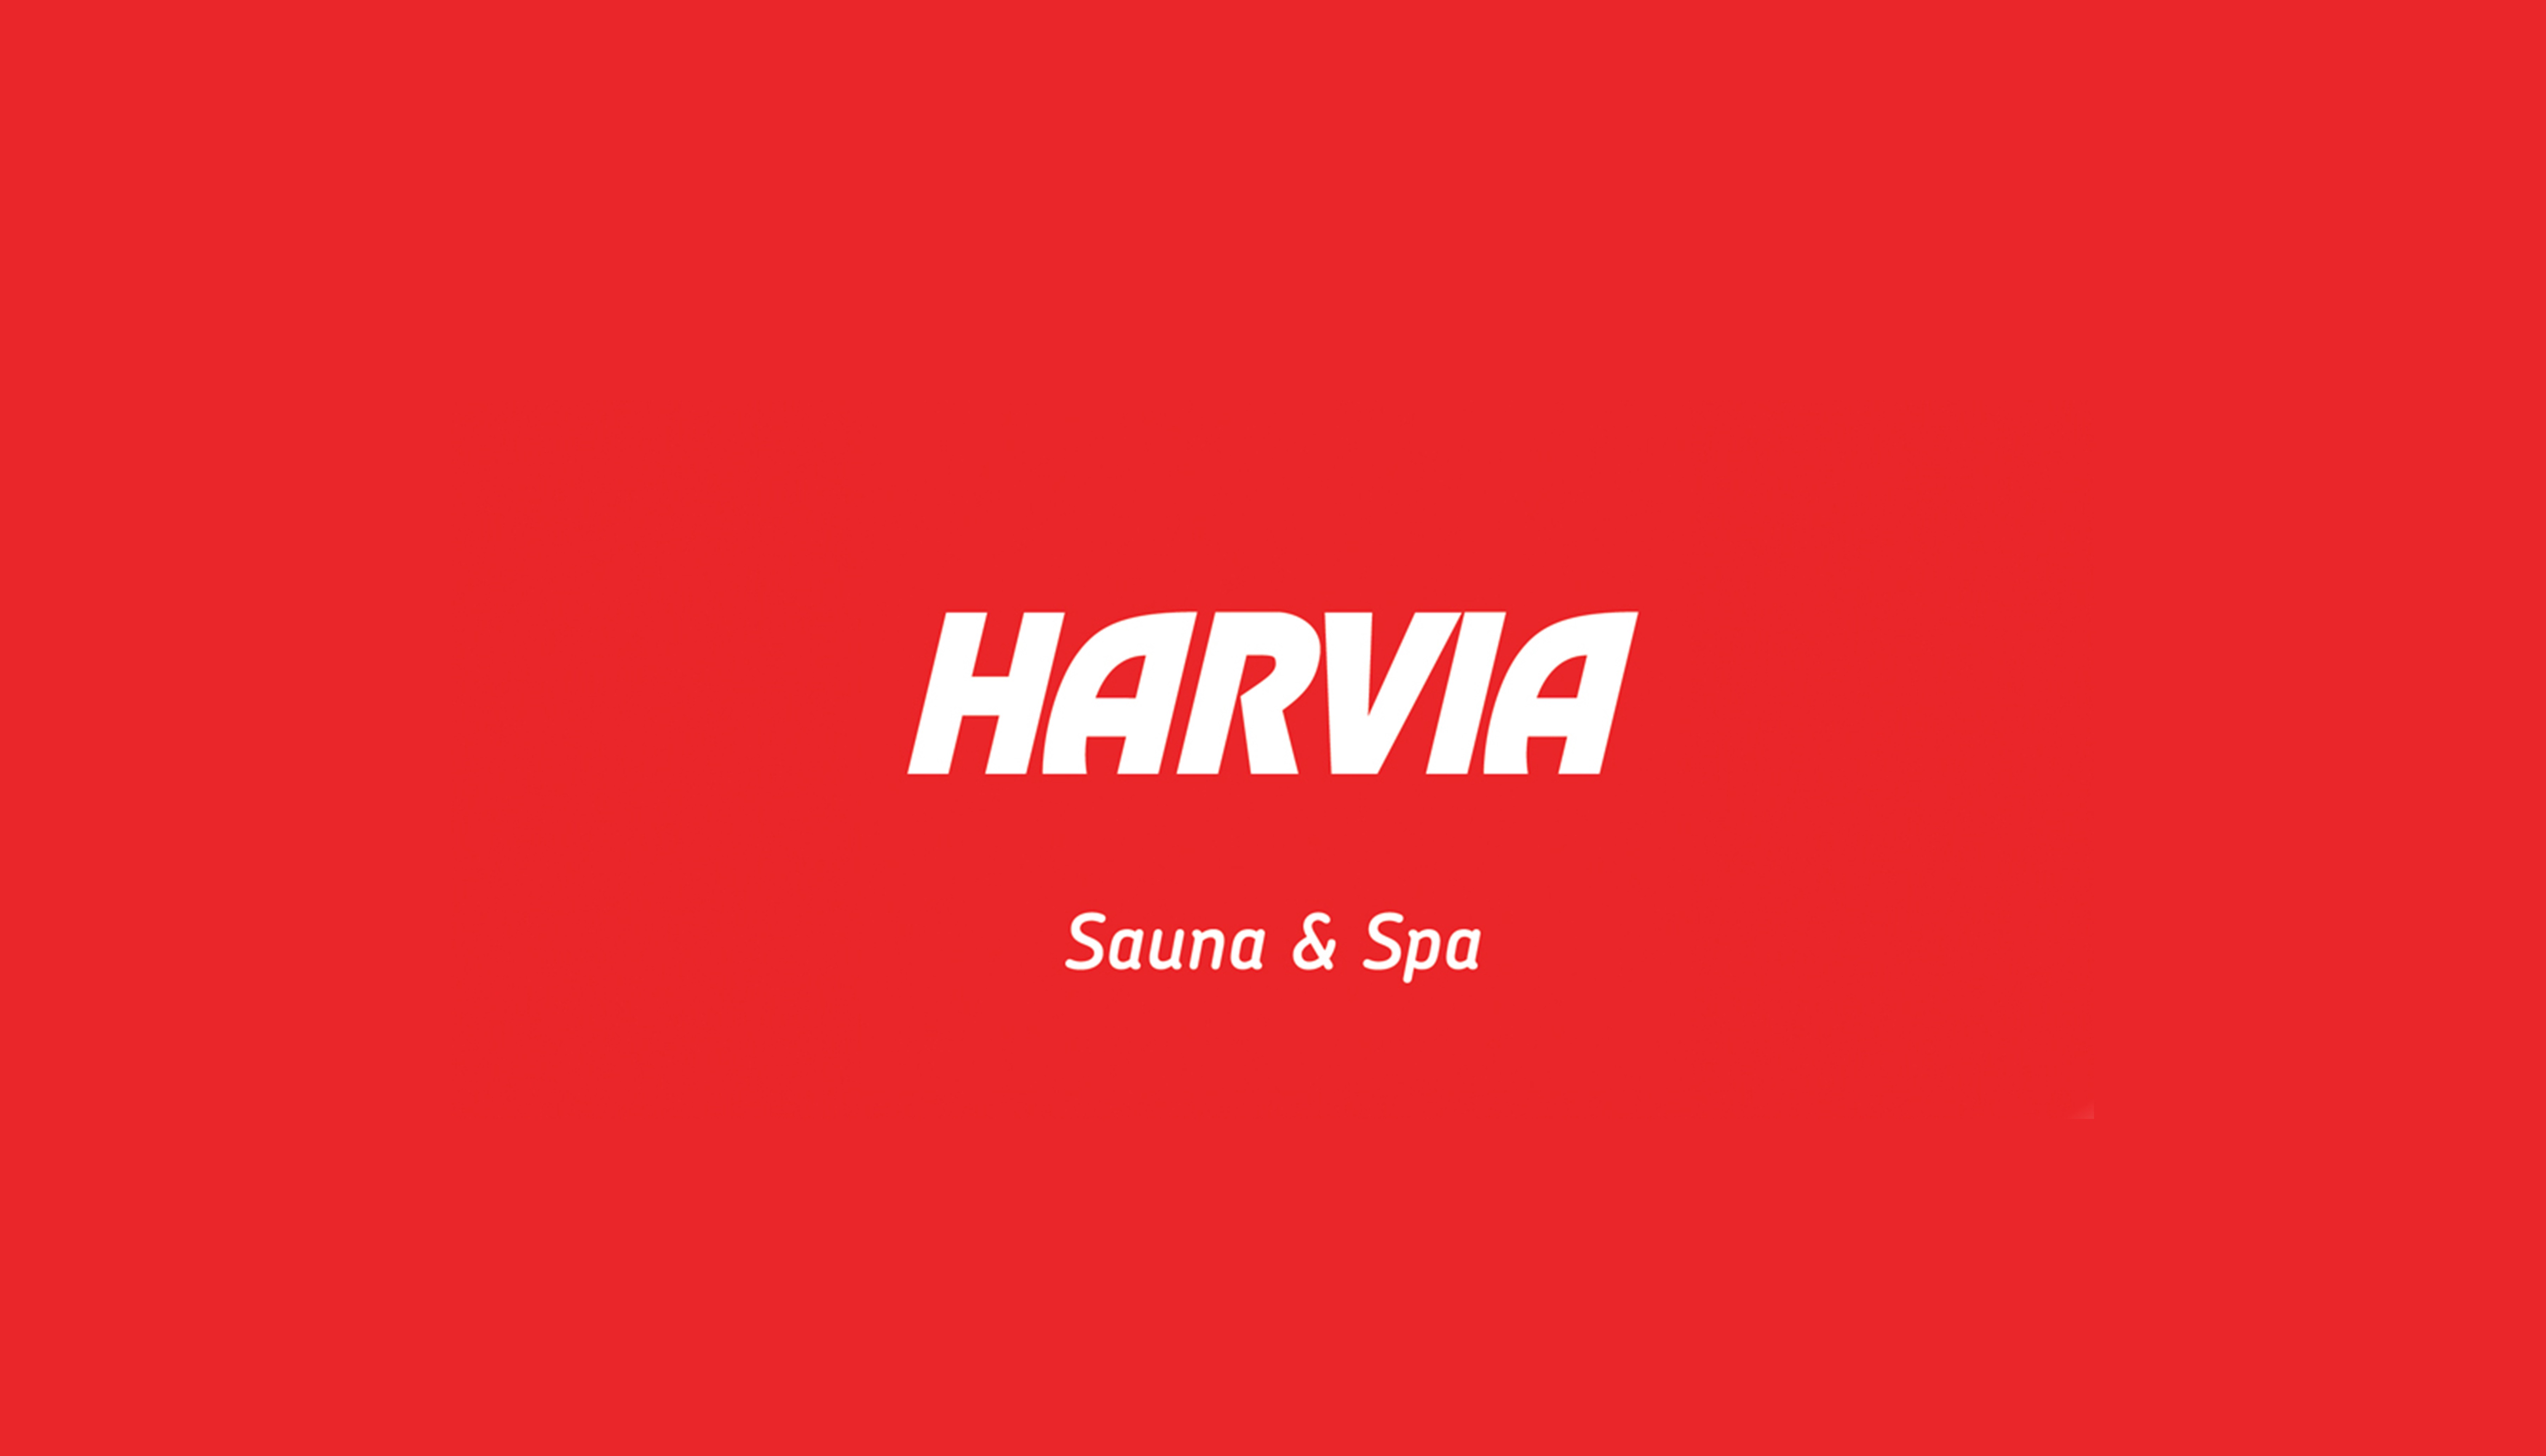 Harvia - Sauna & Spa - Made in Finland